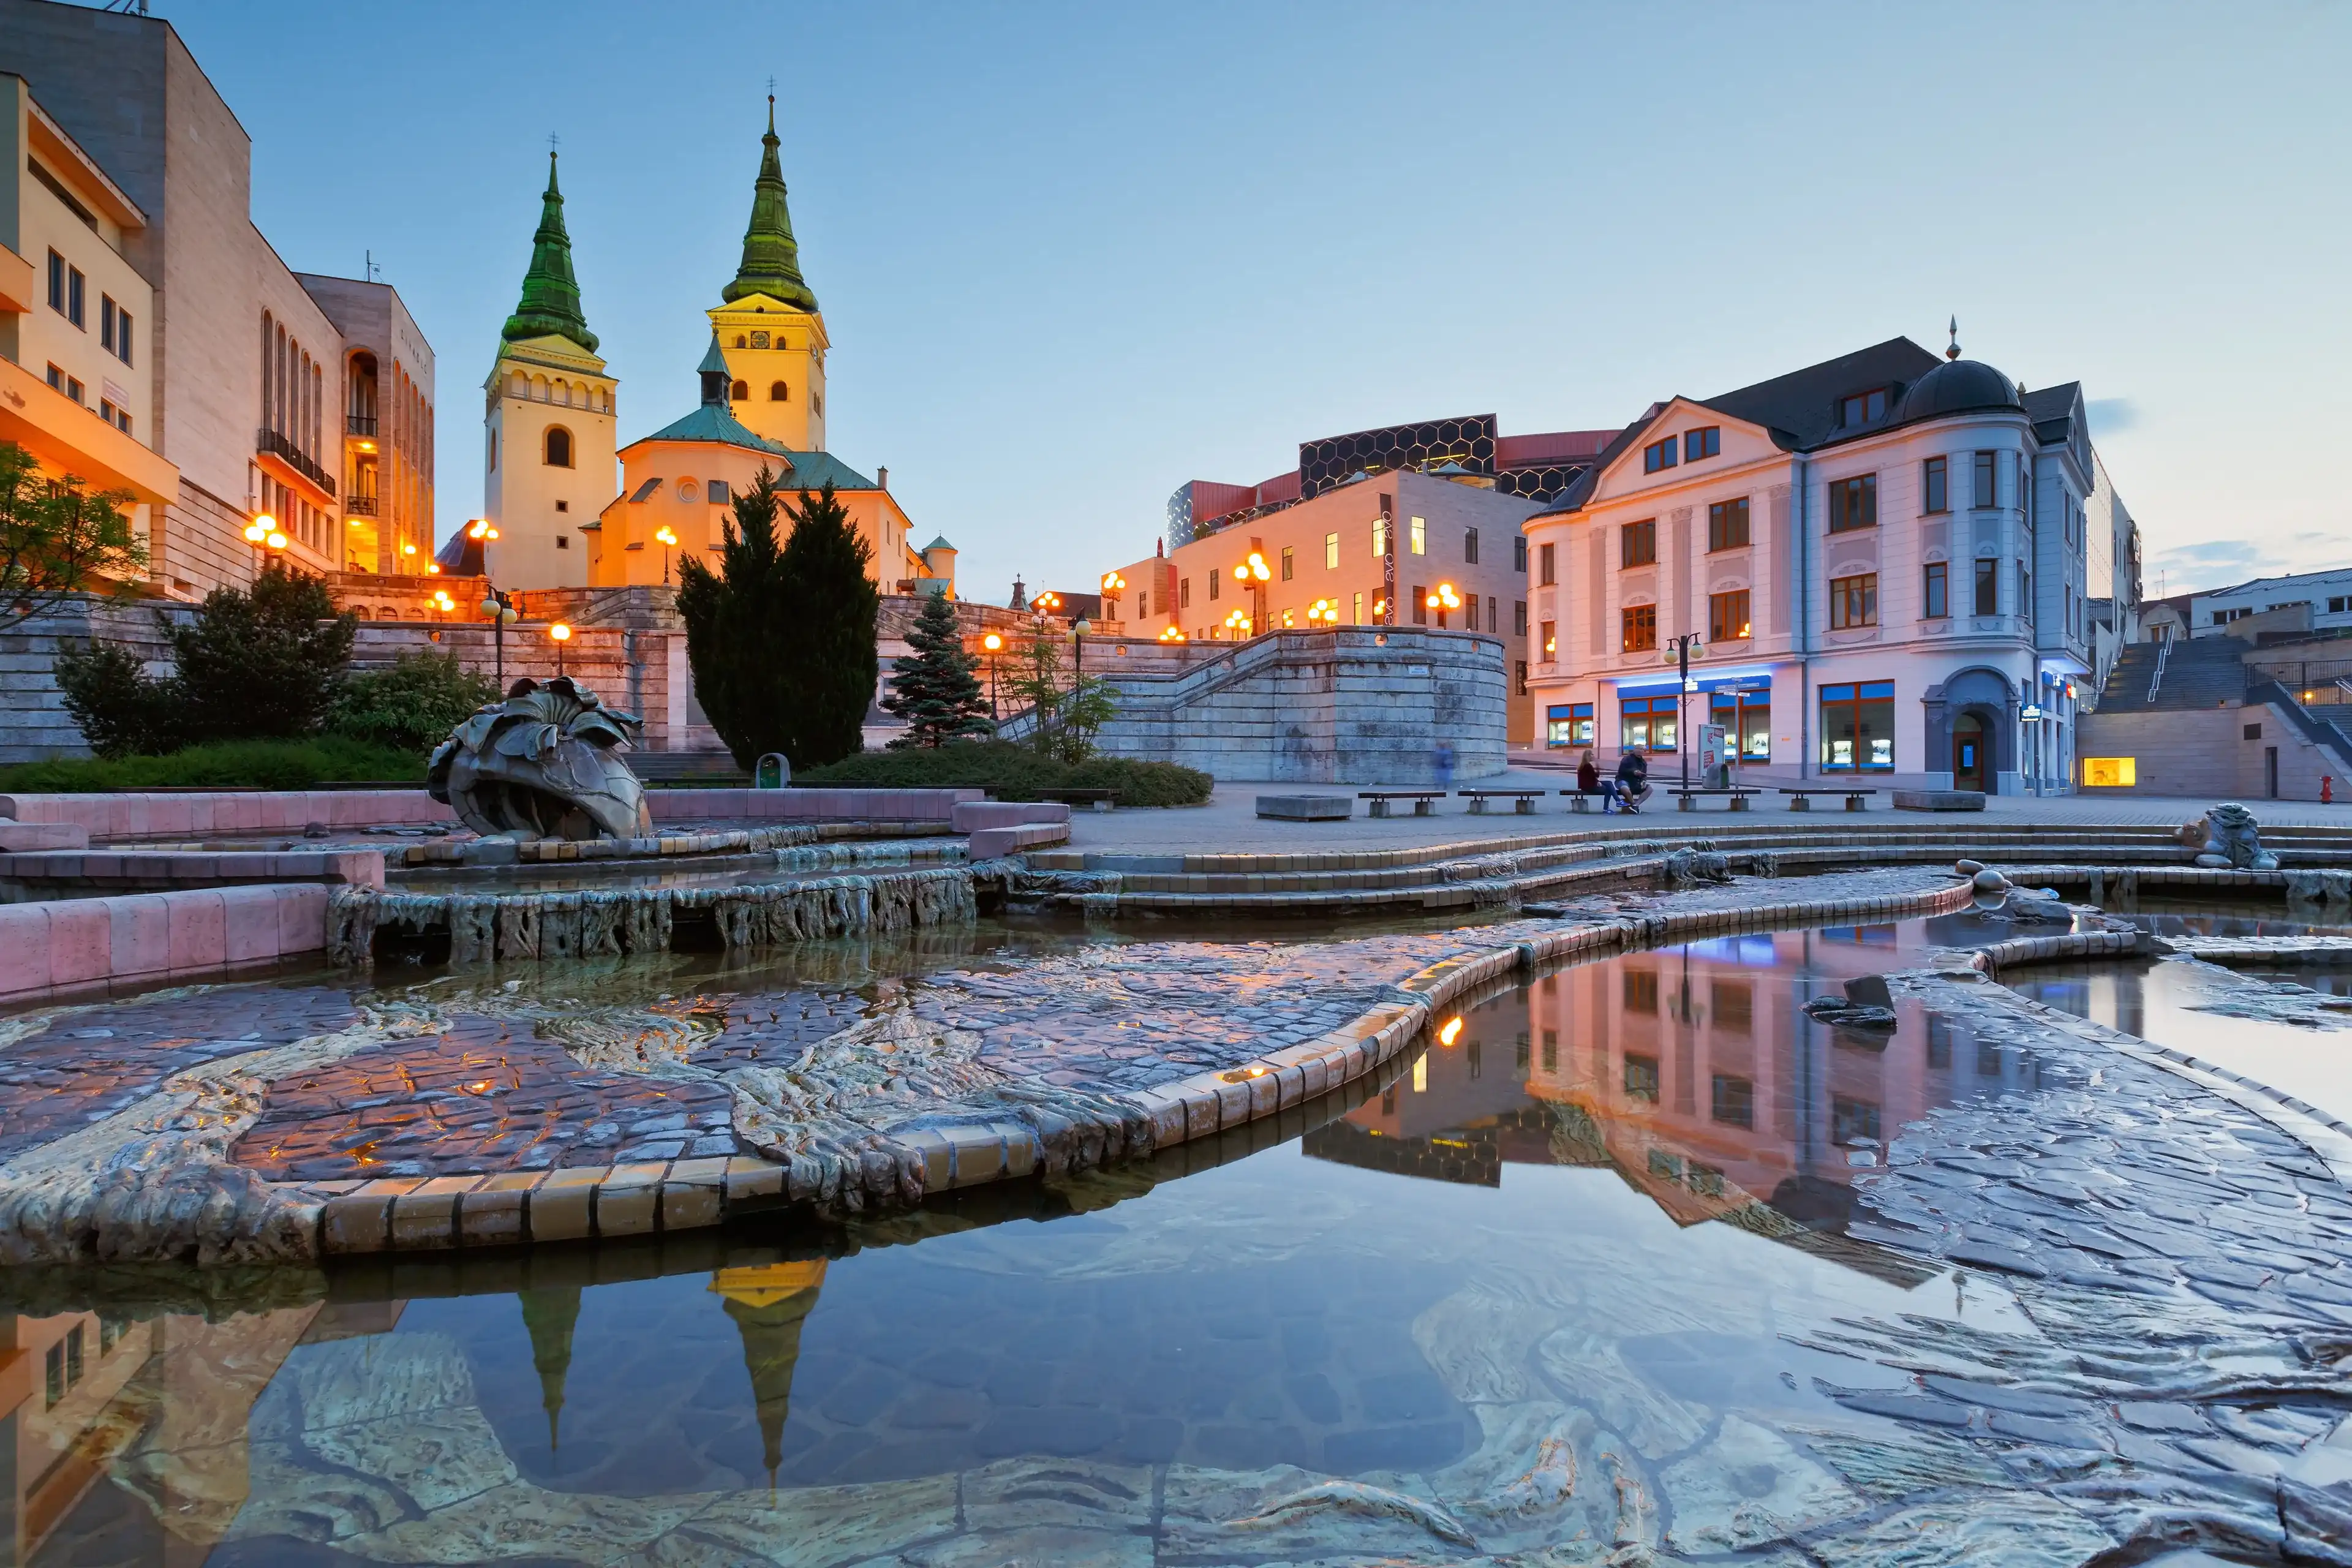 Zilina hotels. Best hotels in Zilina, Slovakia